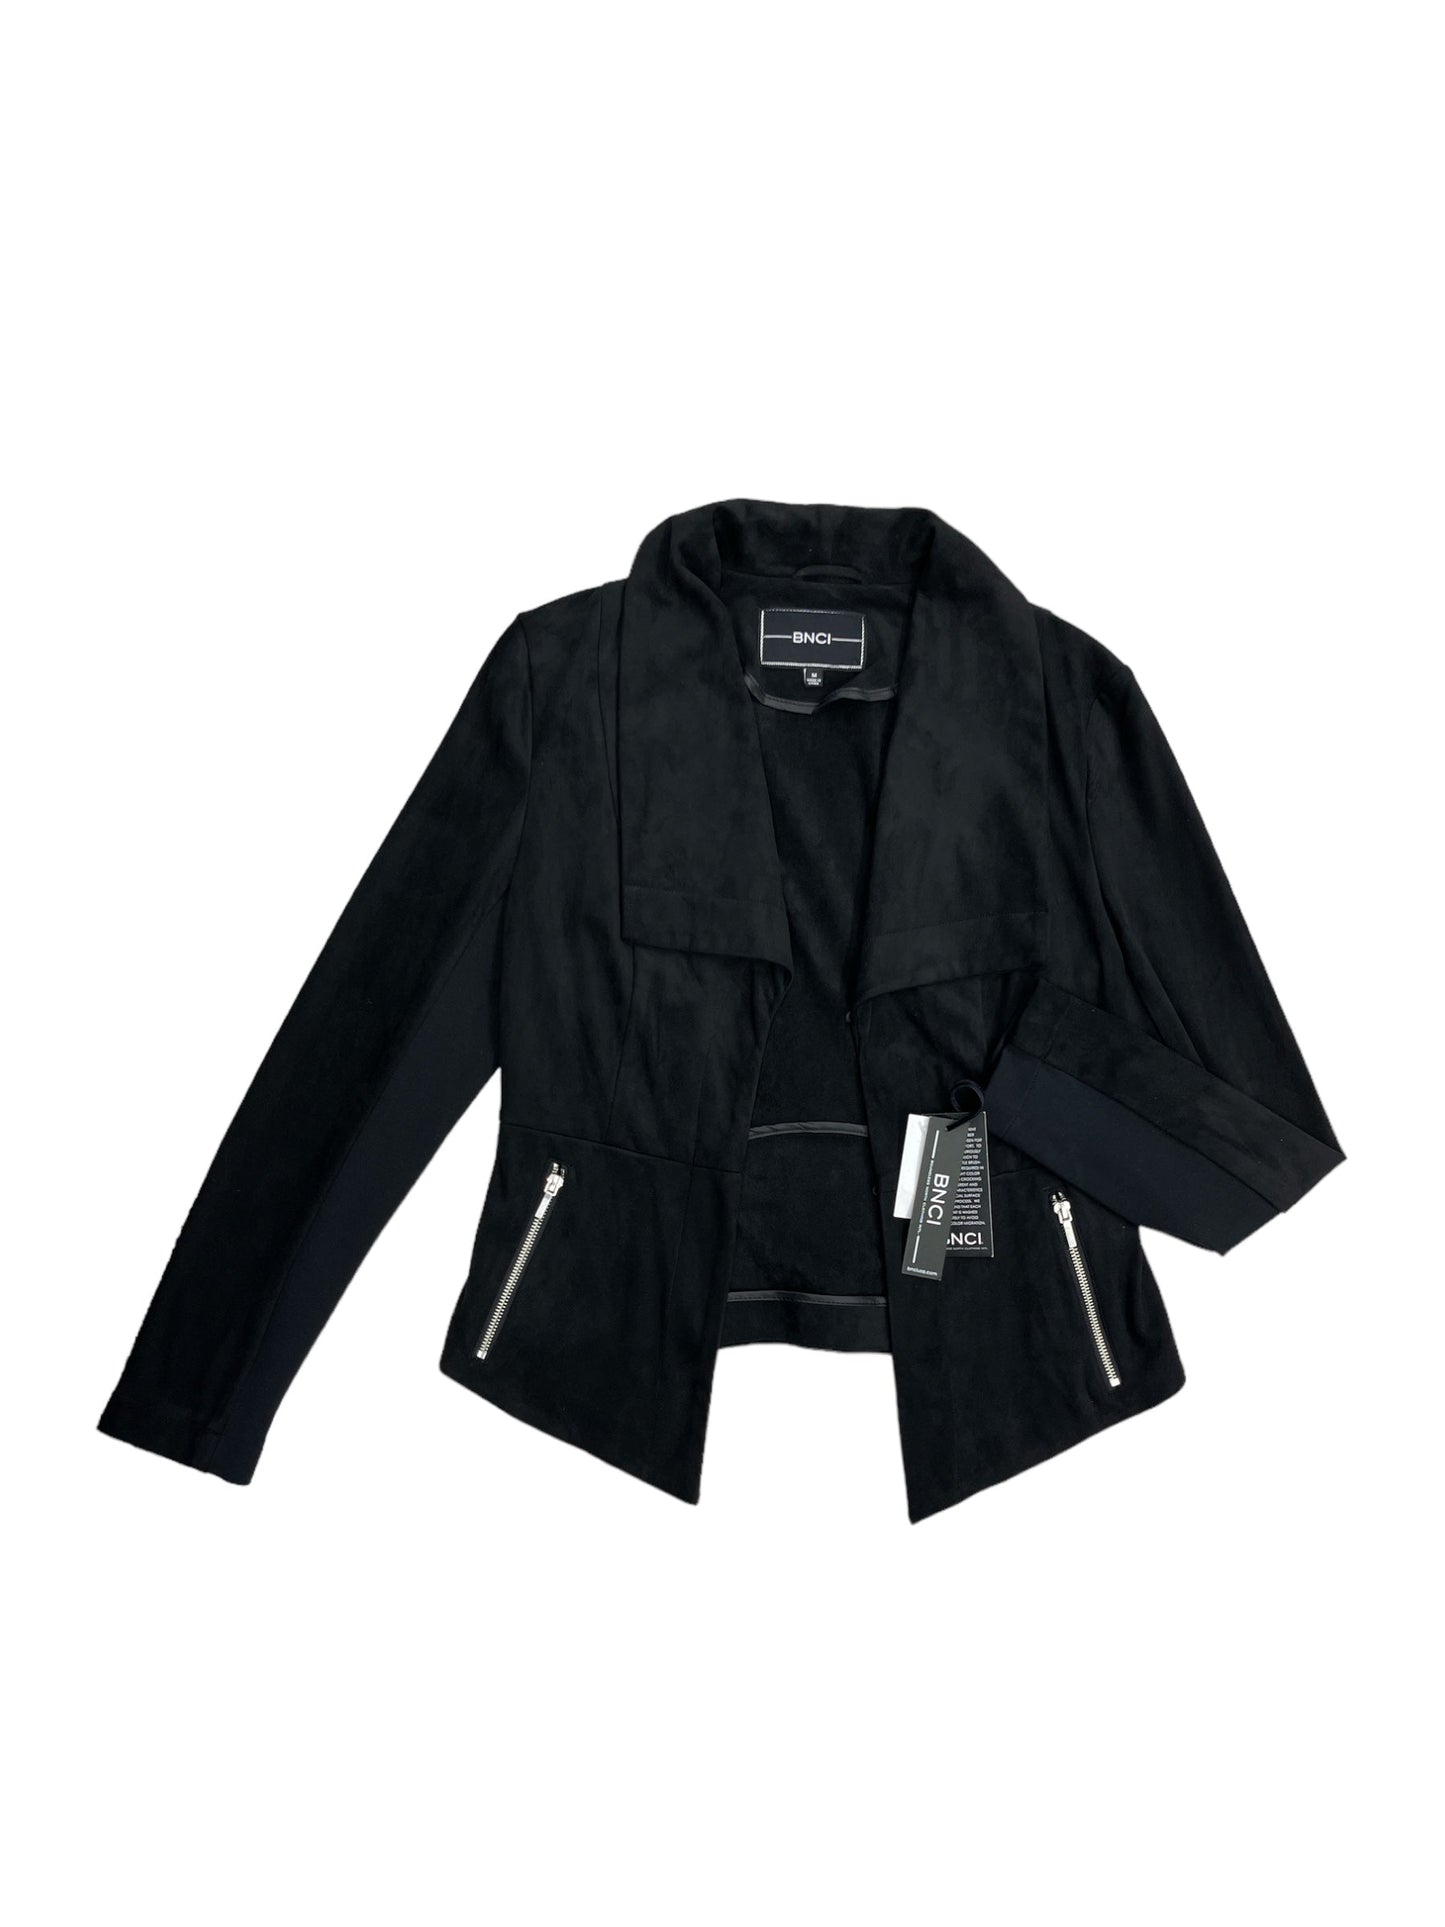 Black Jacket Moto BNCI, Size M